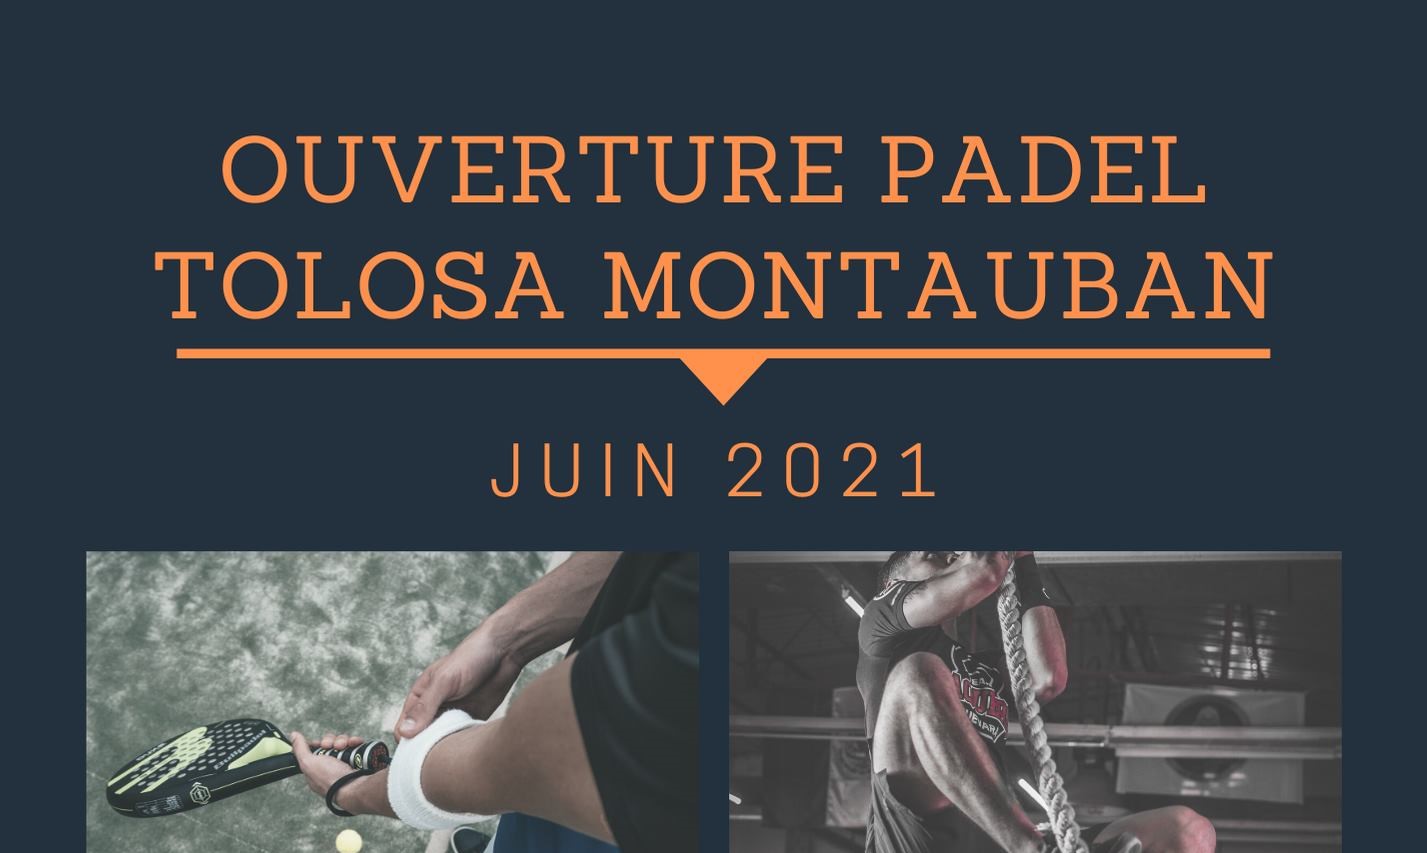 Padel Tolosa Montauban for June 2021